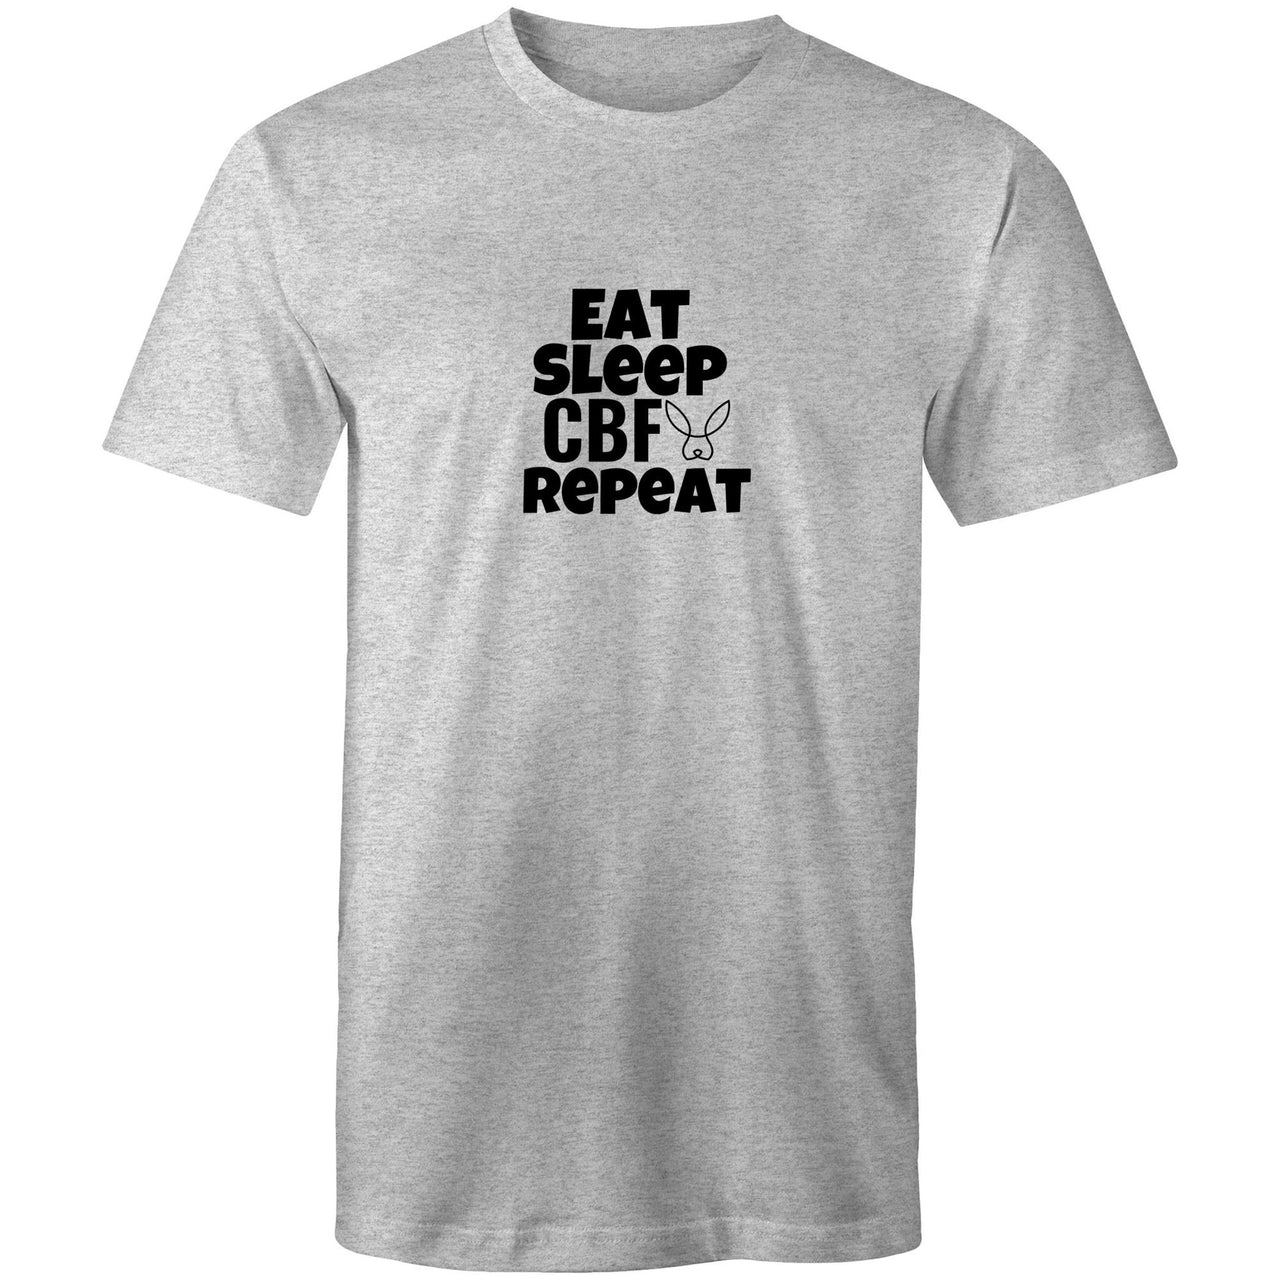 Eat Sleep CBF Repeat Crew grey marle T-Shirt by CBF Clothing